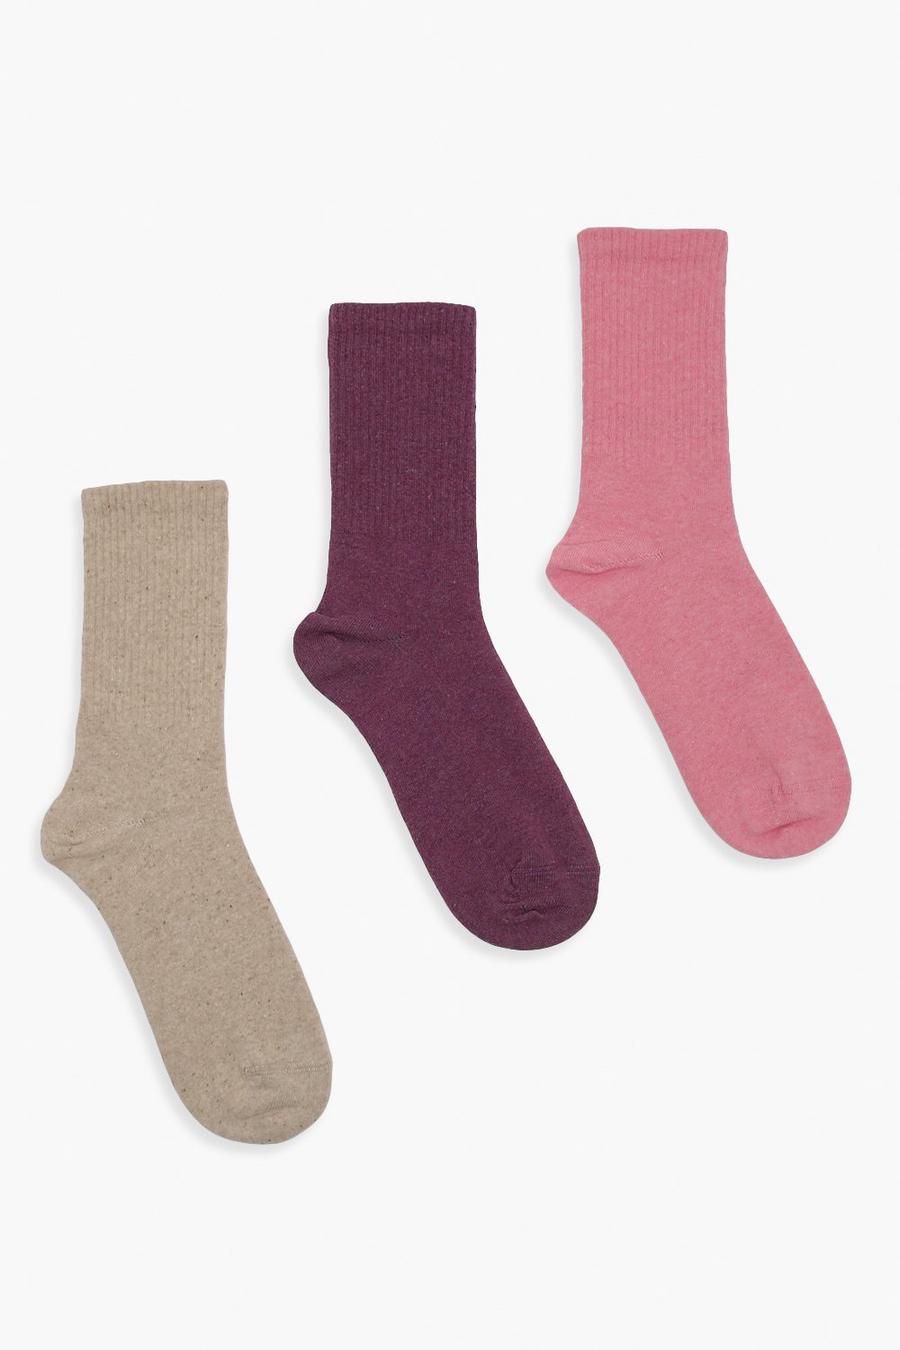 3er-Pack recycelte Socken in neutral, lila & pink, Multi image number 1